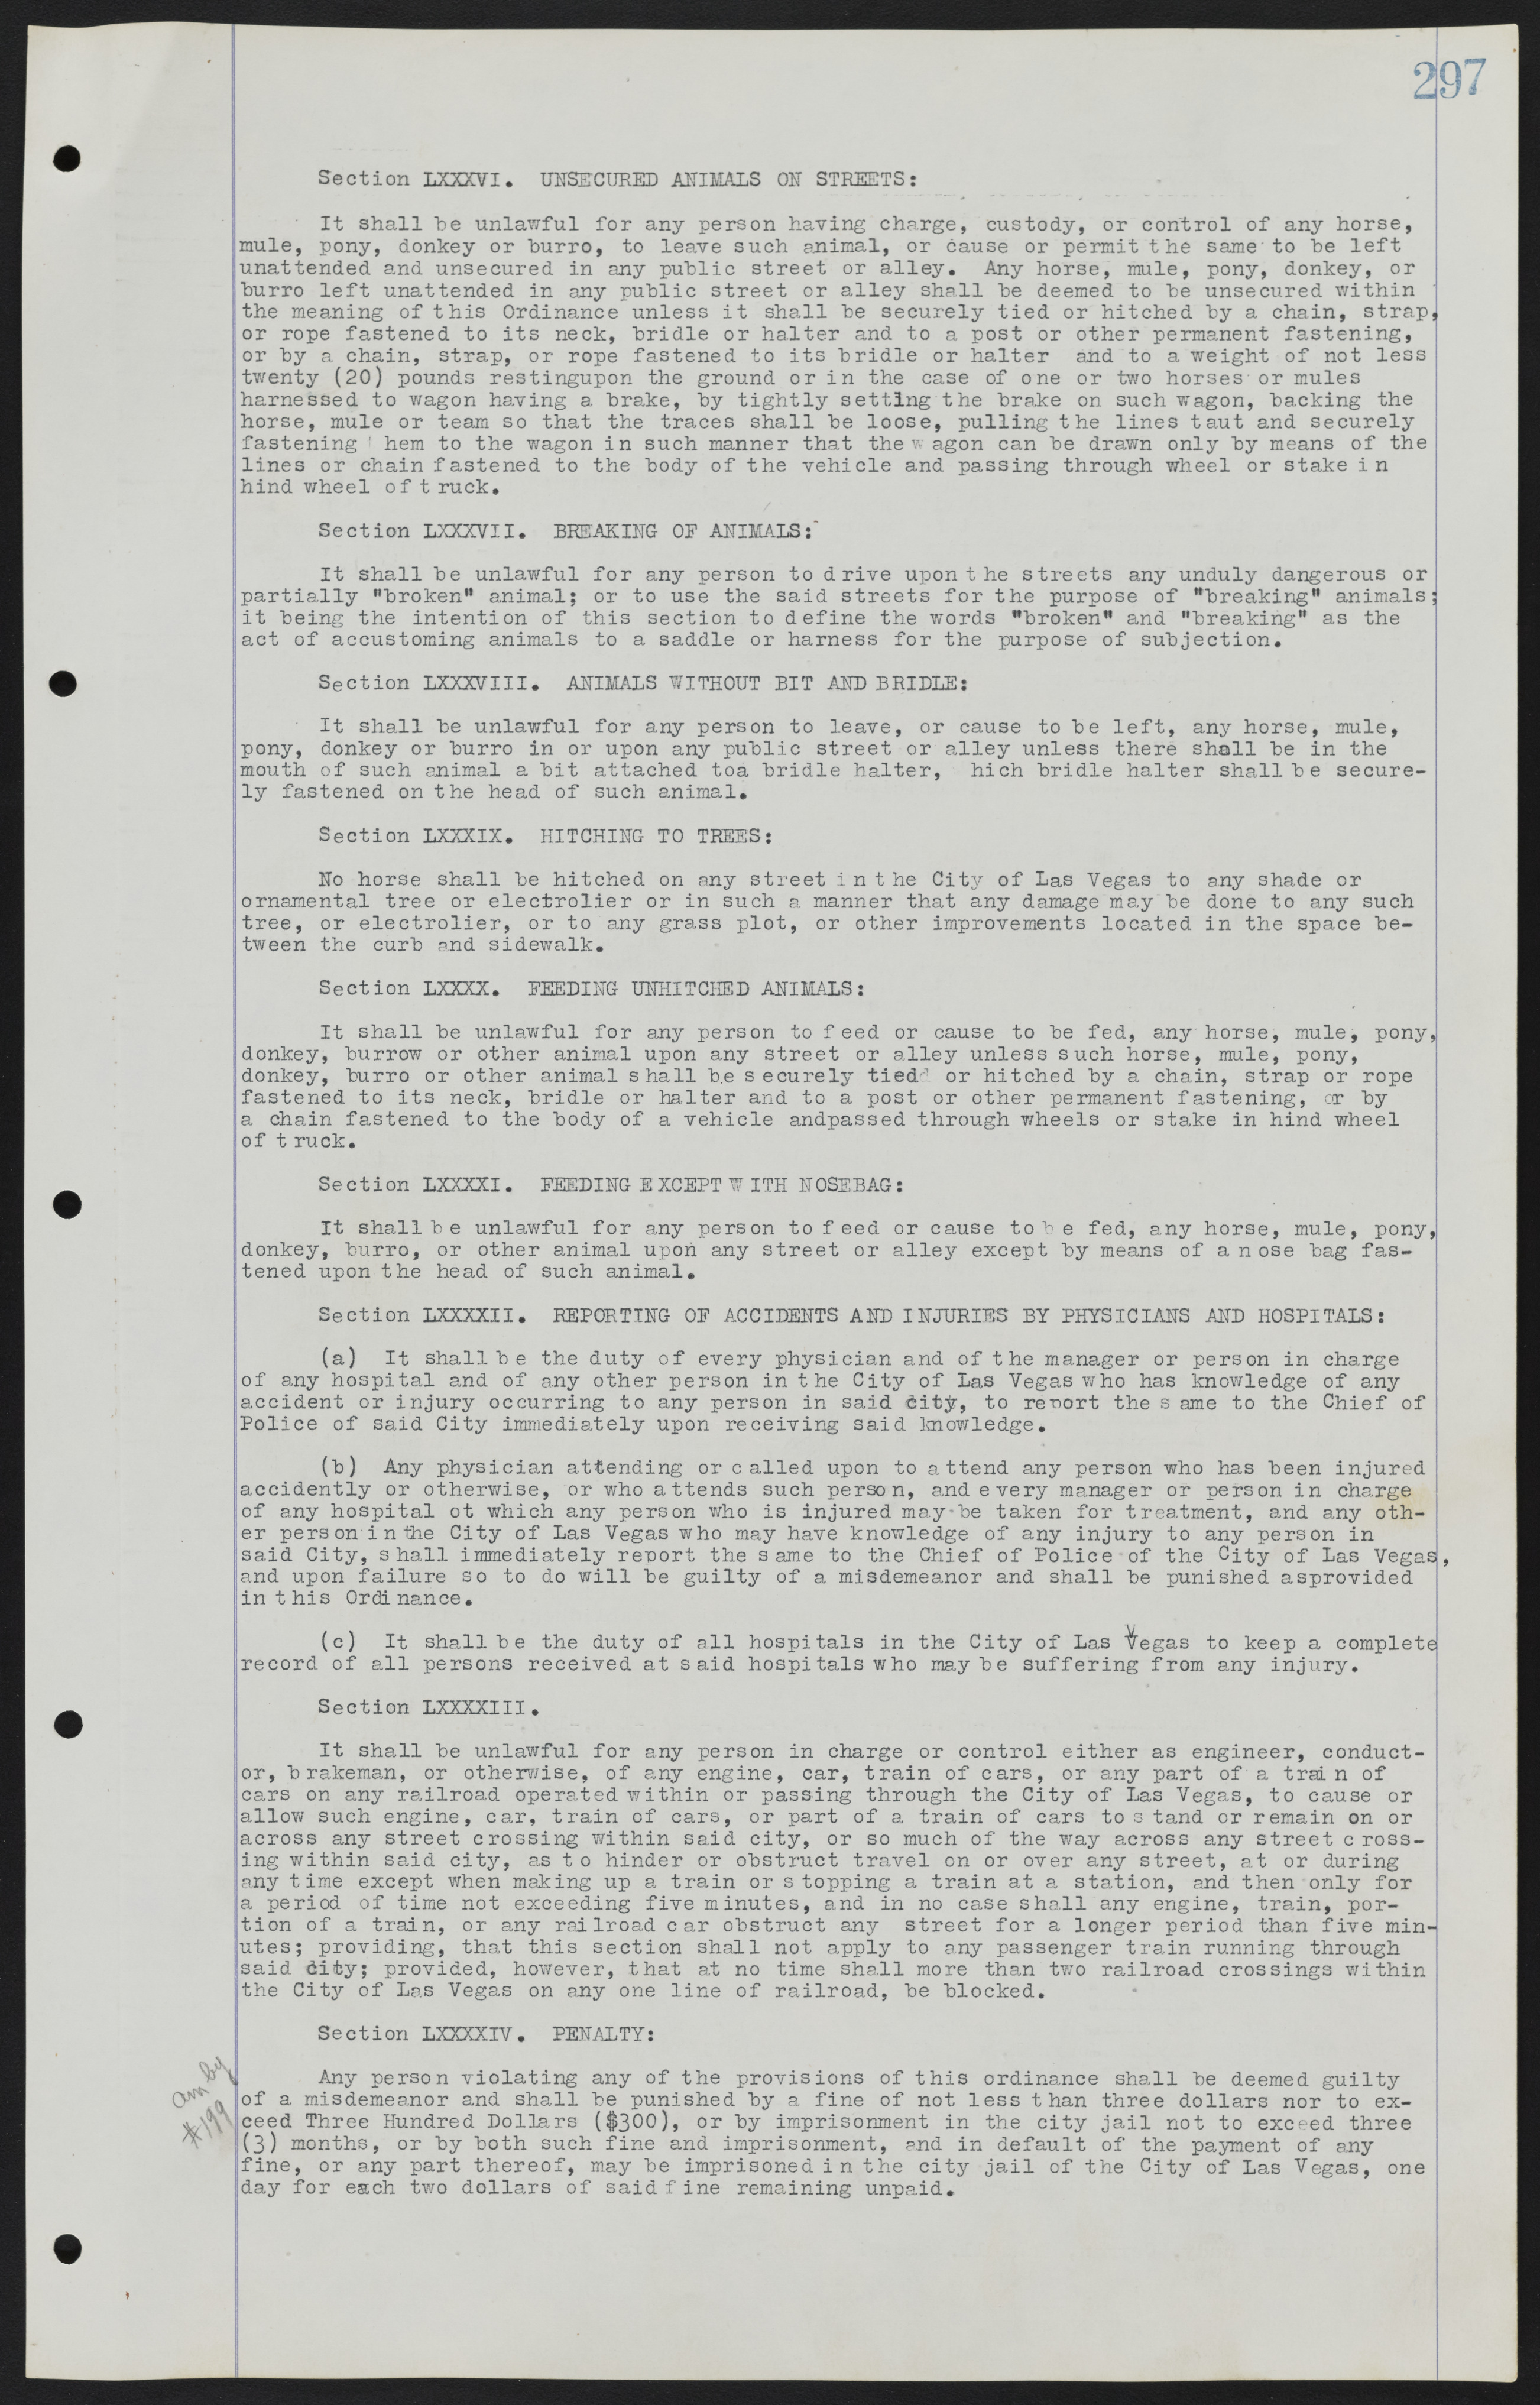 Las Vegas City Ordinances, July 18, 1911 to March 31, 1933, lvc000013-301